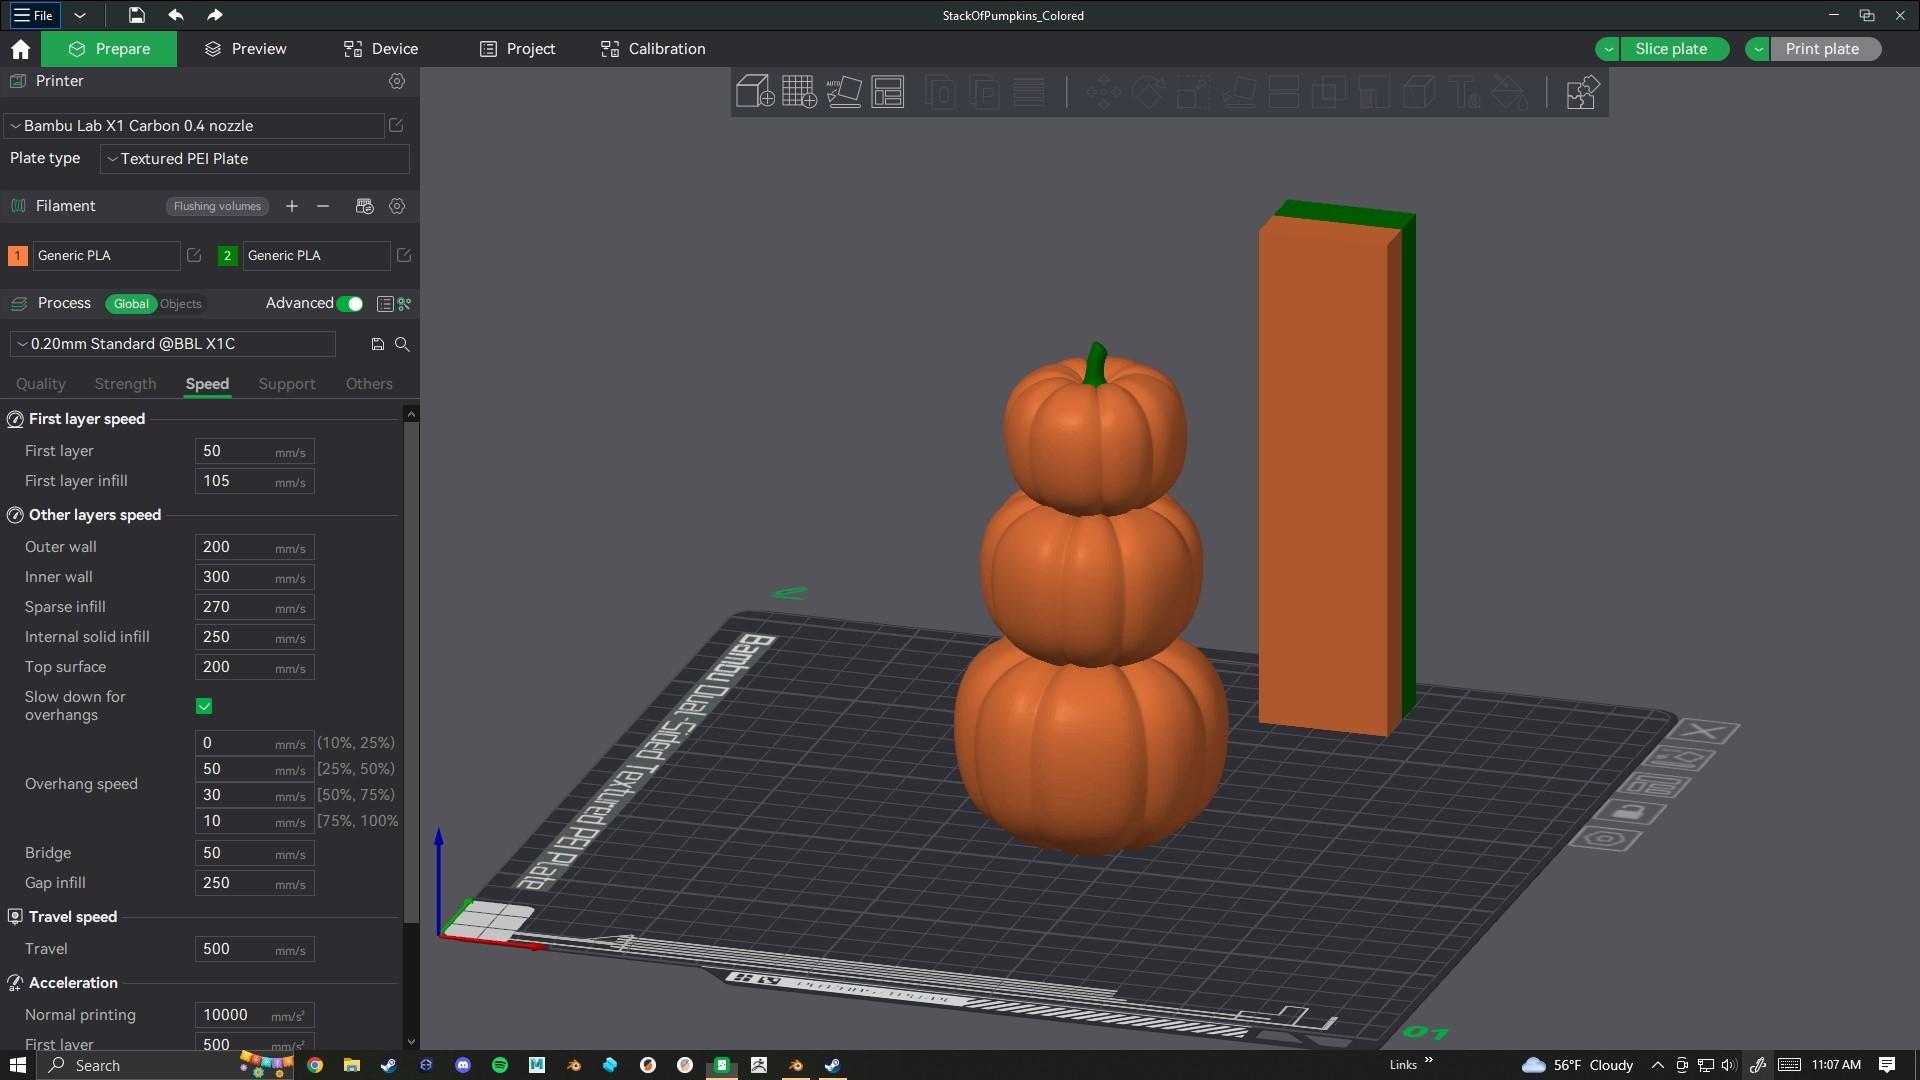 Stack of Pumpkins 3d model